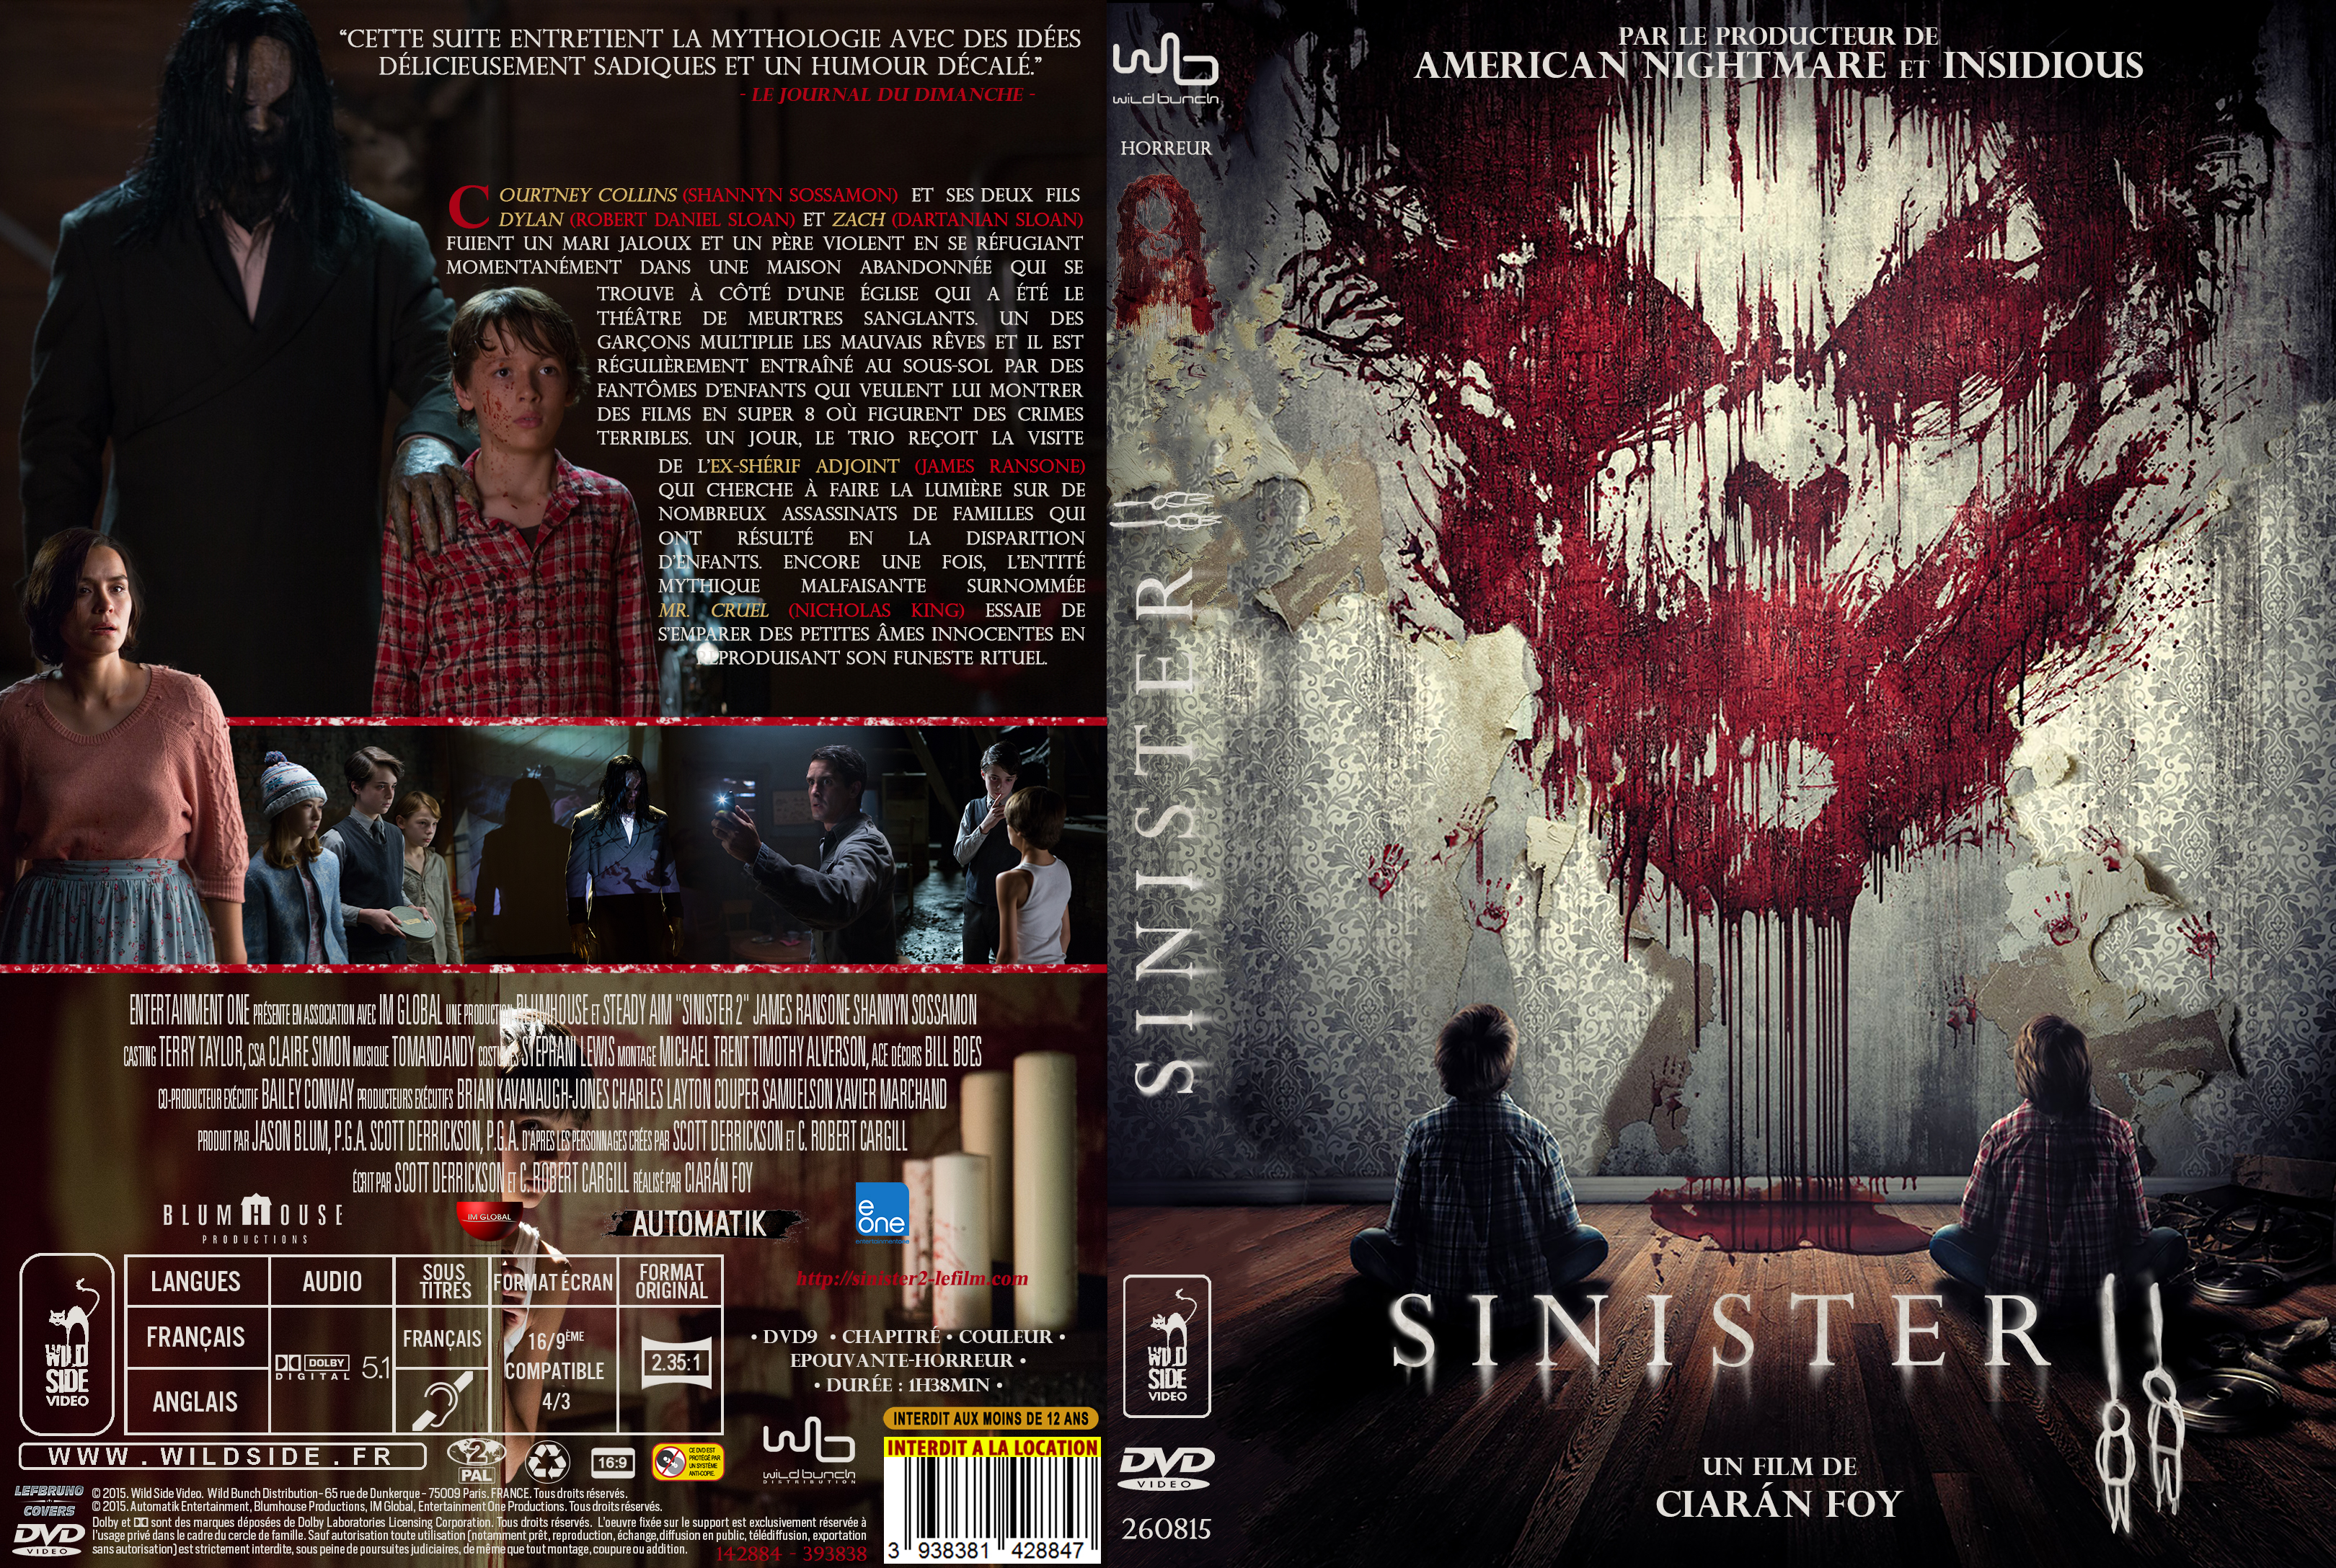 Jaquette DVD Sinister 2 custom